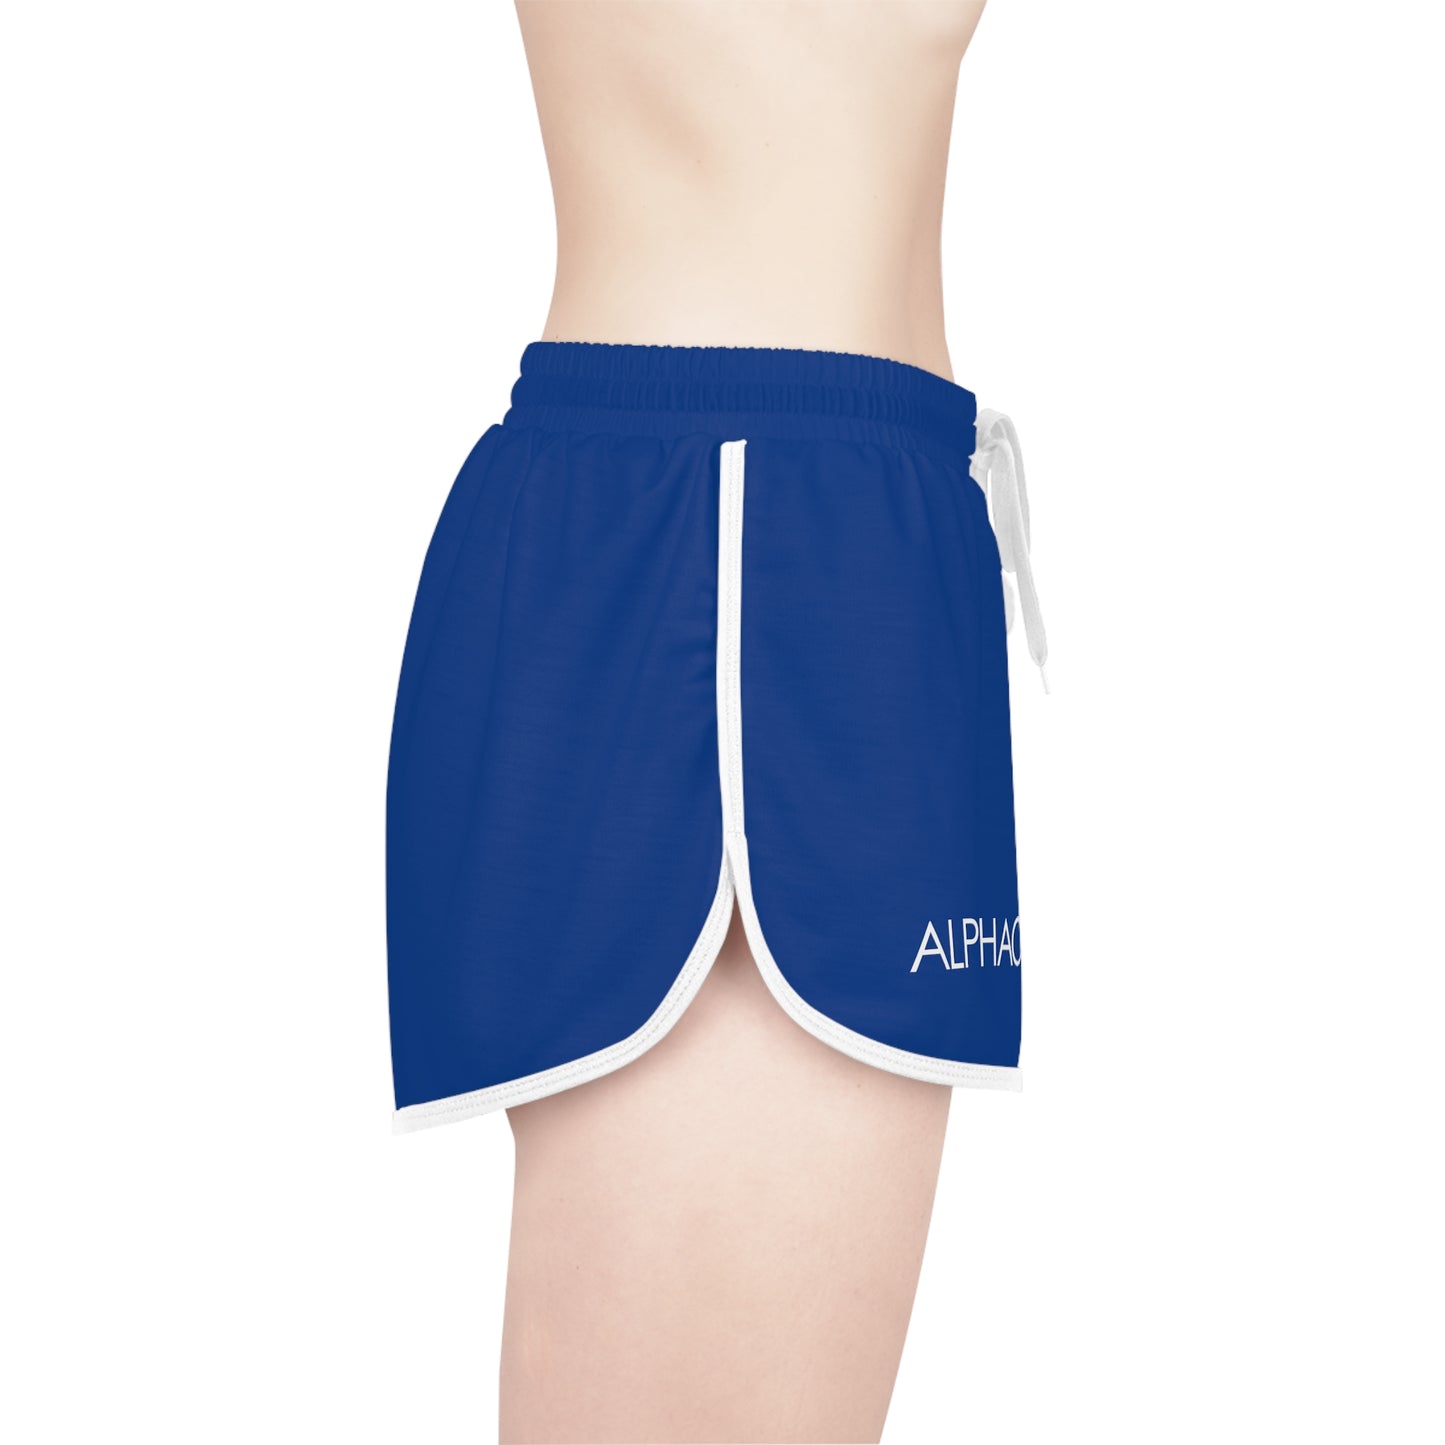 AlphaChic Relaxed Shorts - Dark Blue